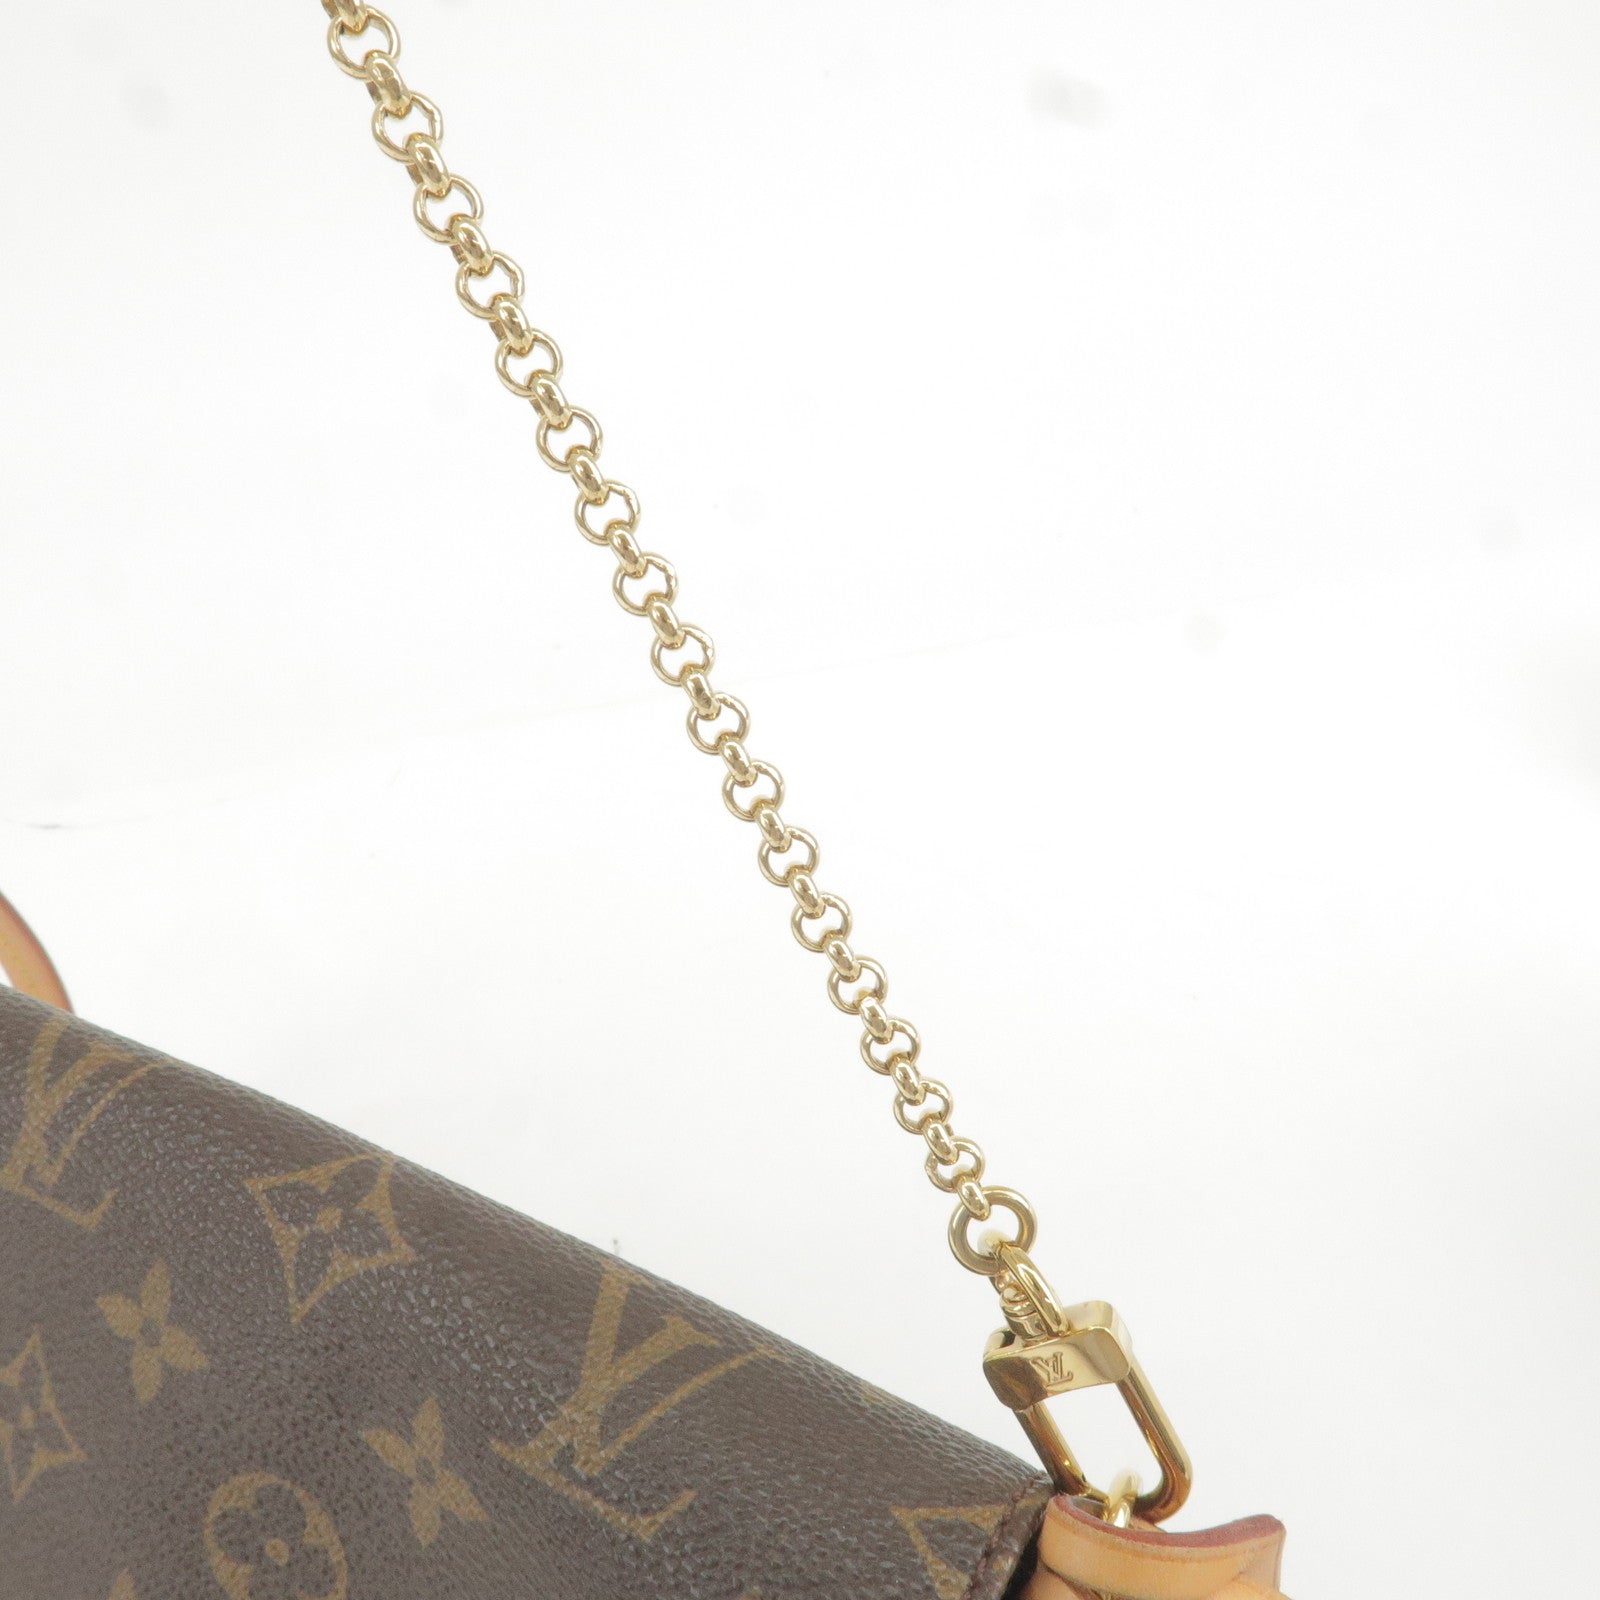 Louis Vuitton City Steamer PM 2wayShoulder Bag(Gold)